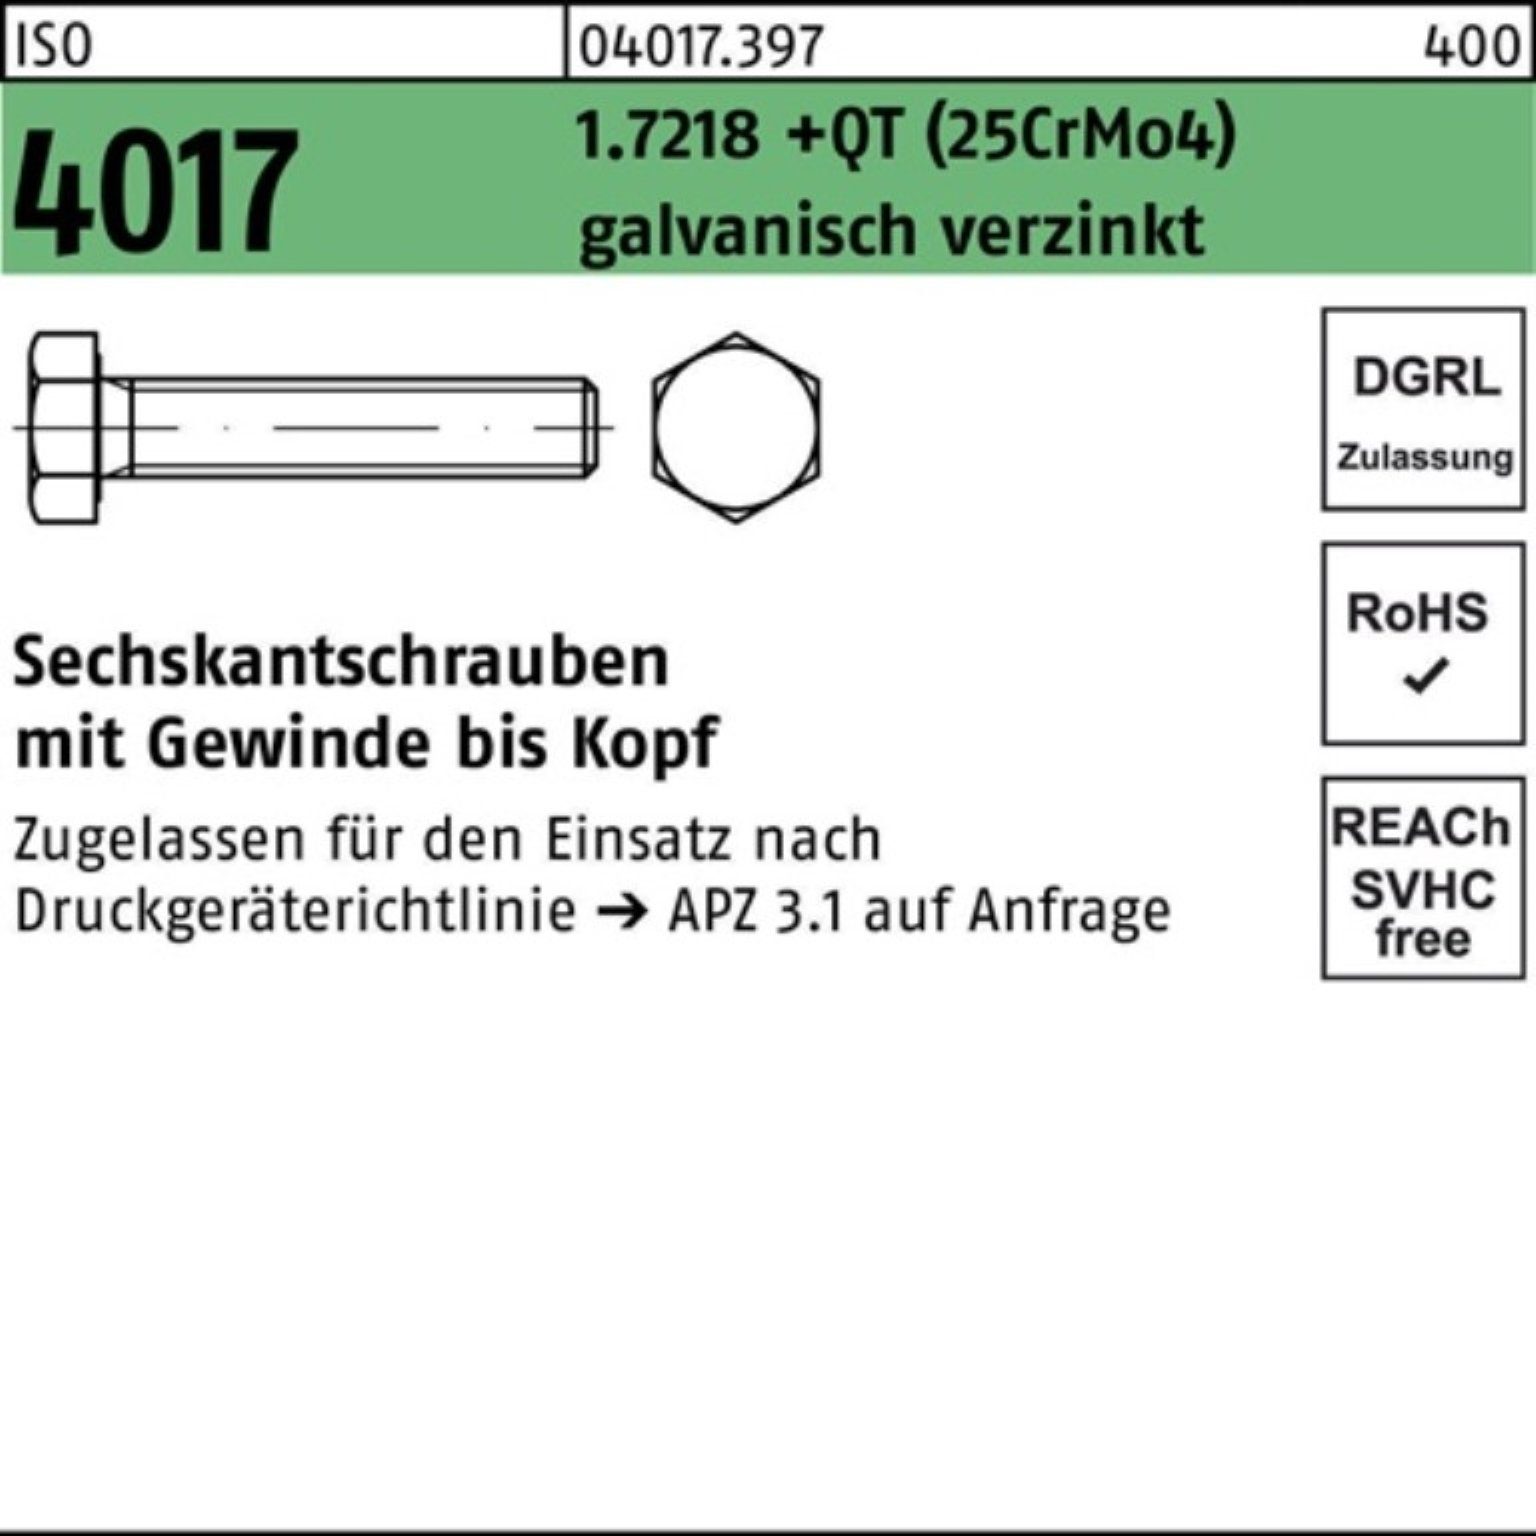 M16x30 Pack (25CrMo4) Bufab VG Sechskantschraube ISO g 100er 4017 1.7218 +QT Sechskantschraube